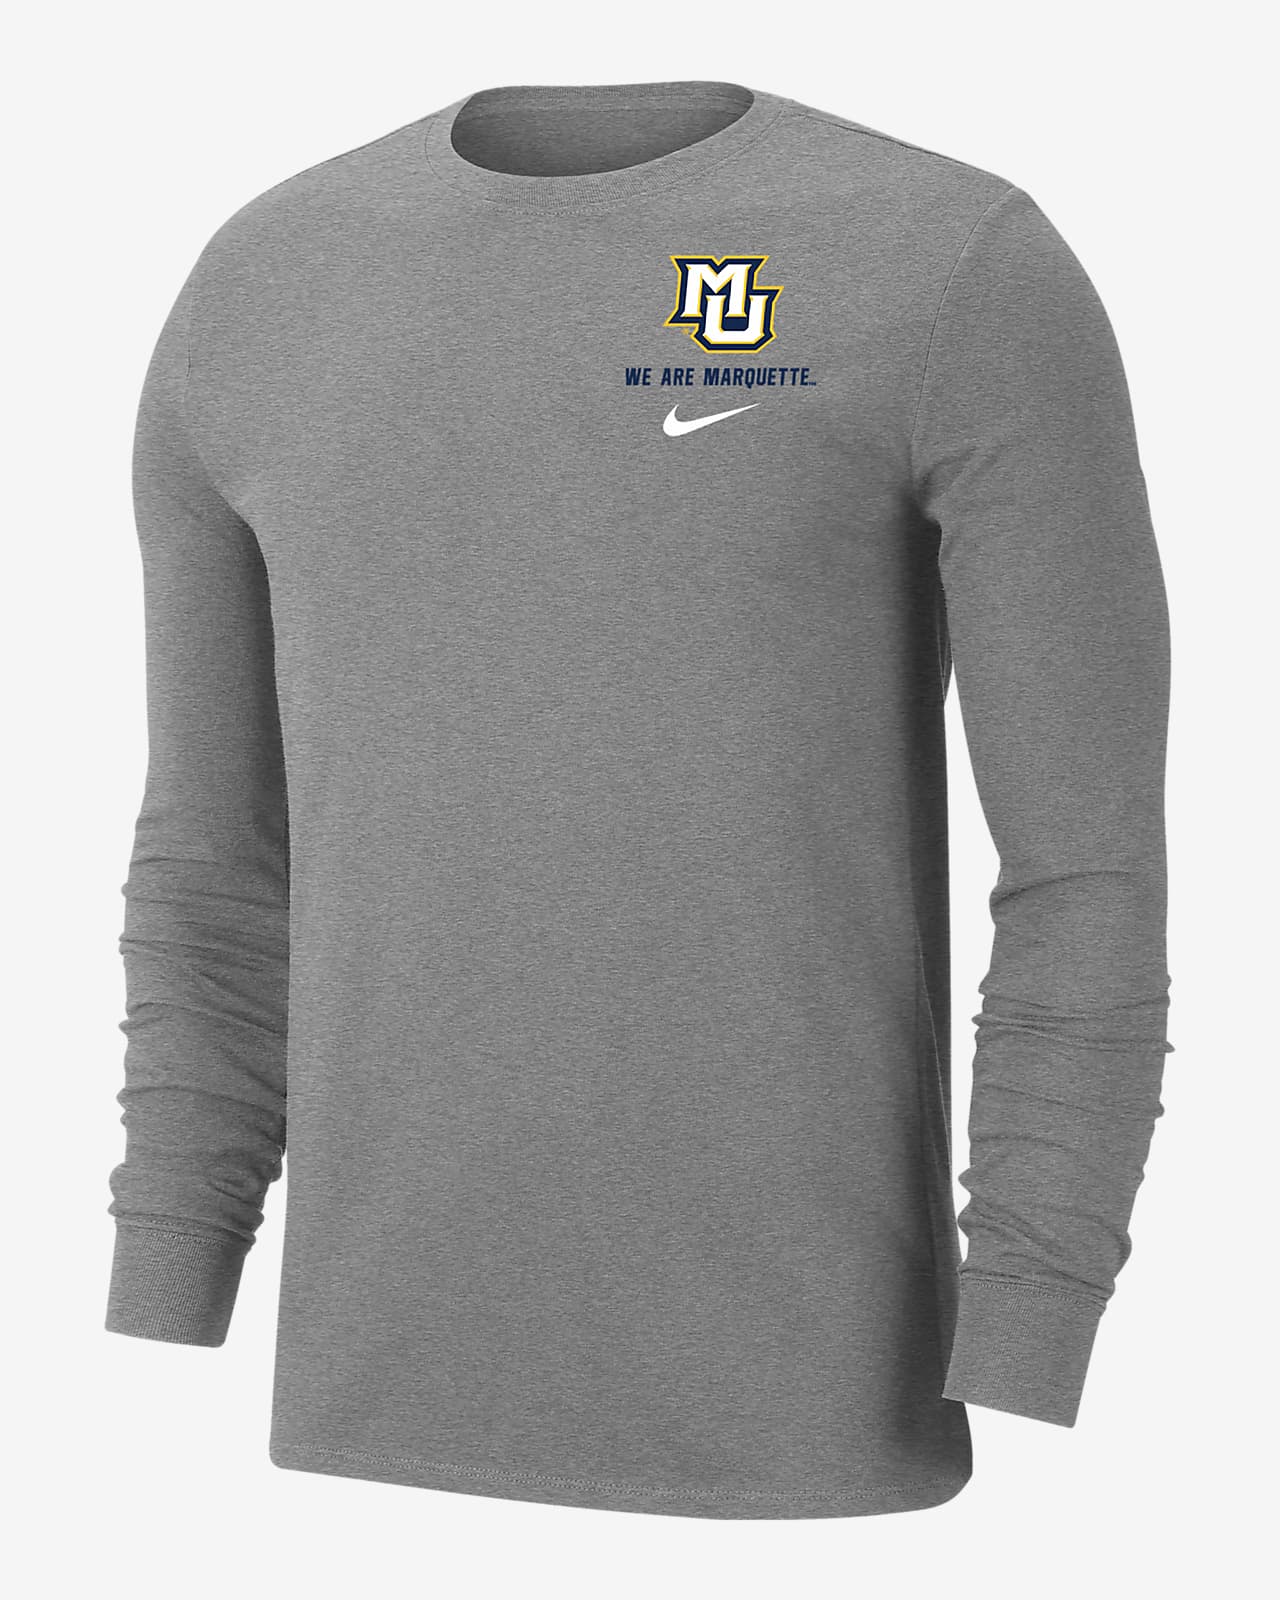 Nike College Dri-FIT (Marquette) Men's Long-Sleeve T-Shirt